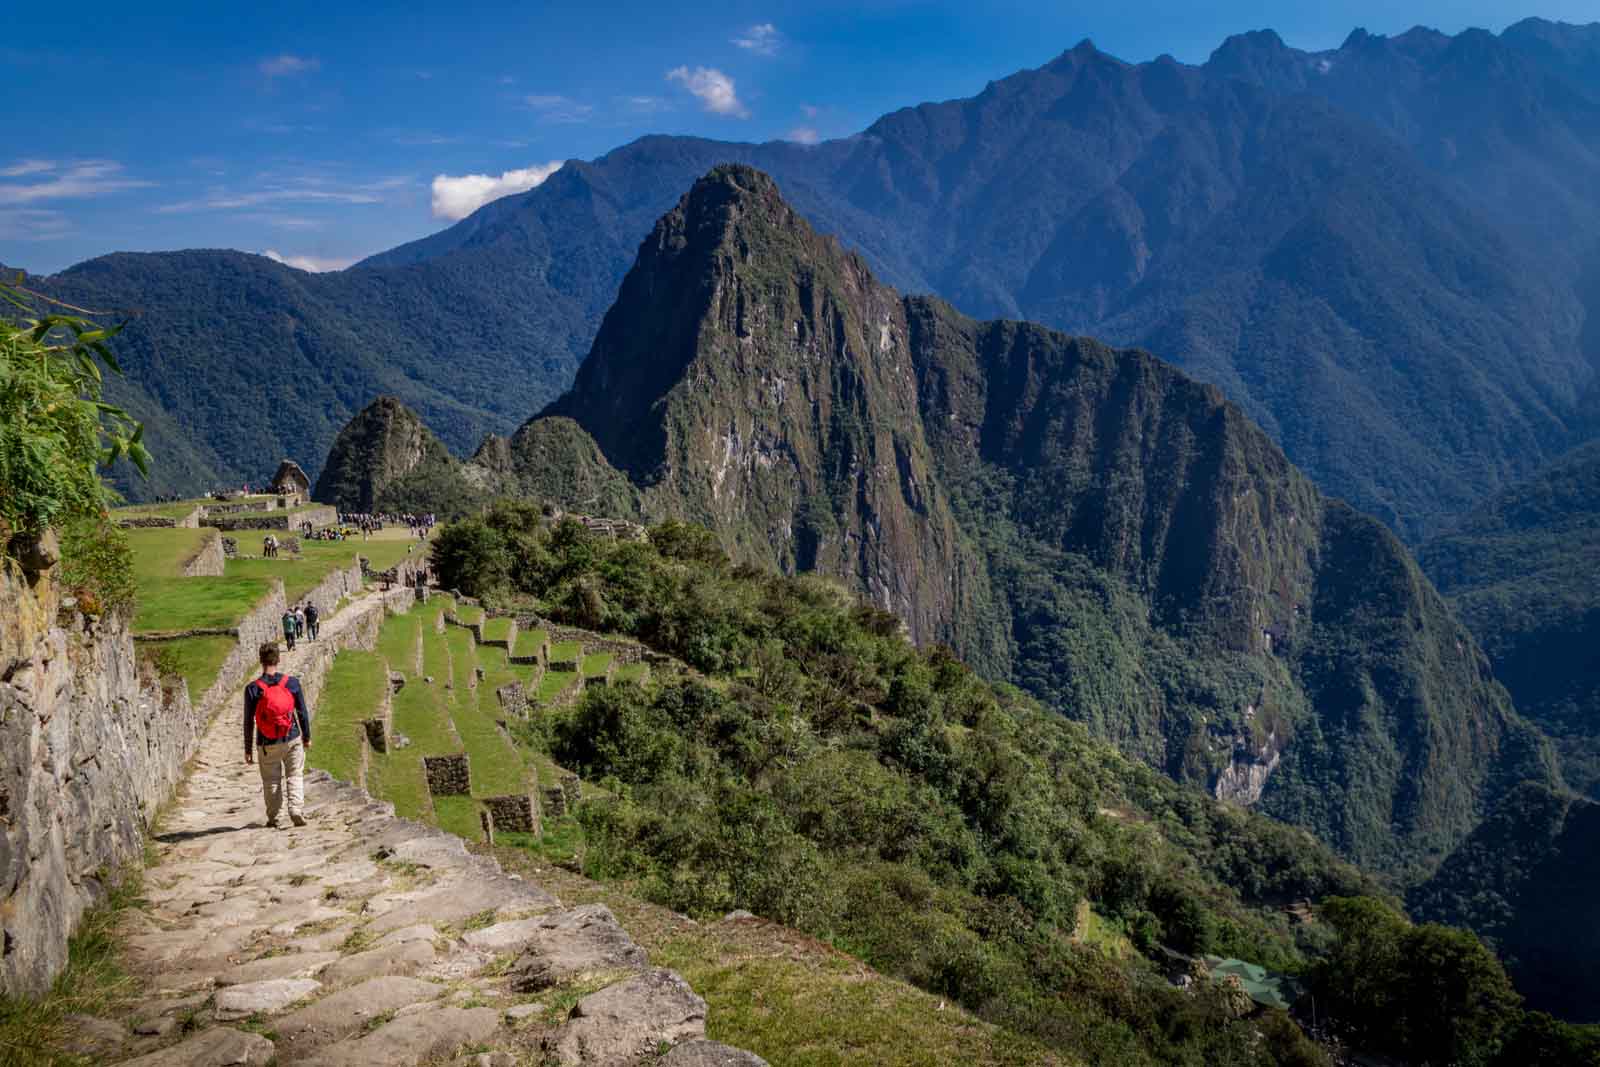  Peru | Three tips for exploring the Inca Trail